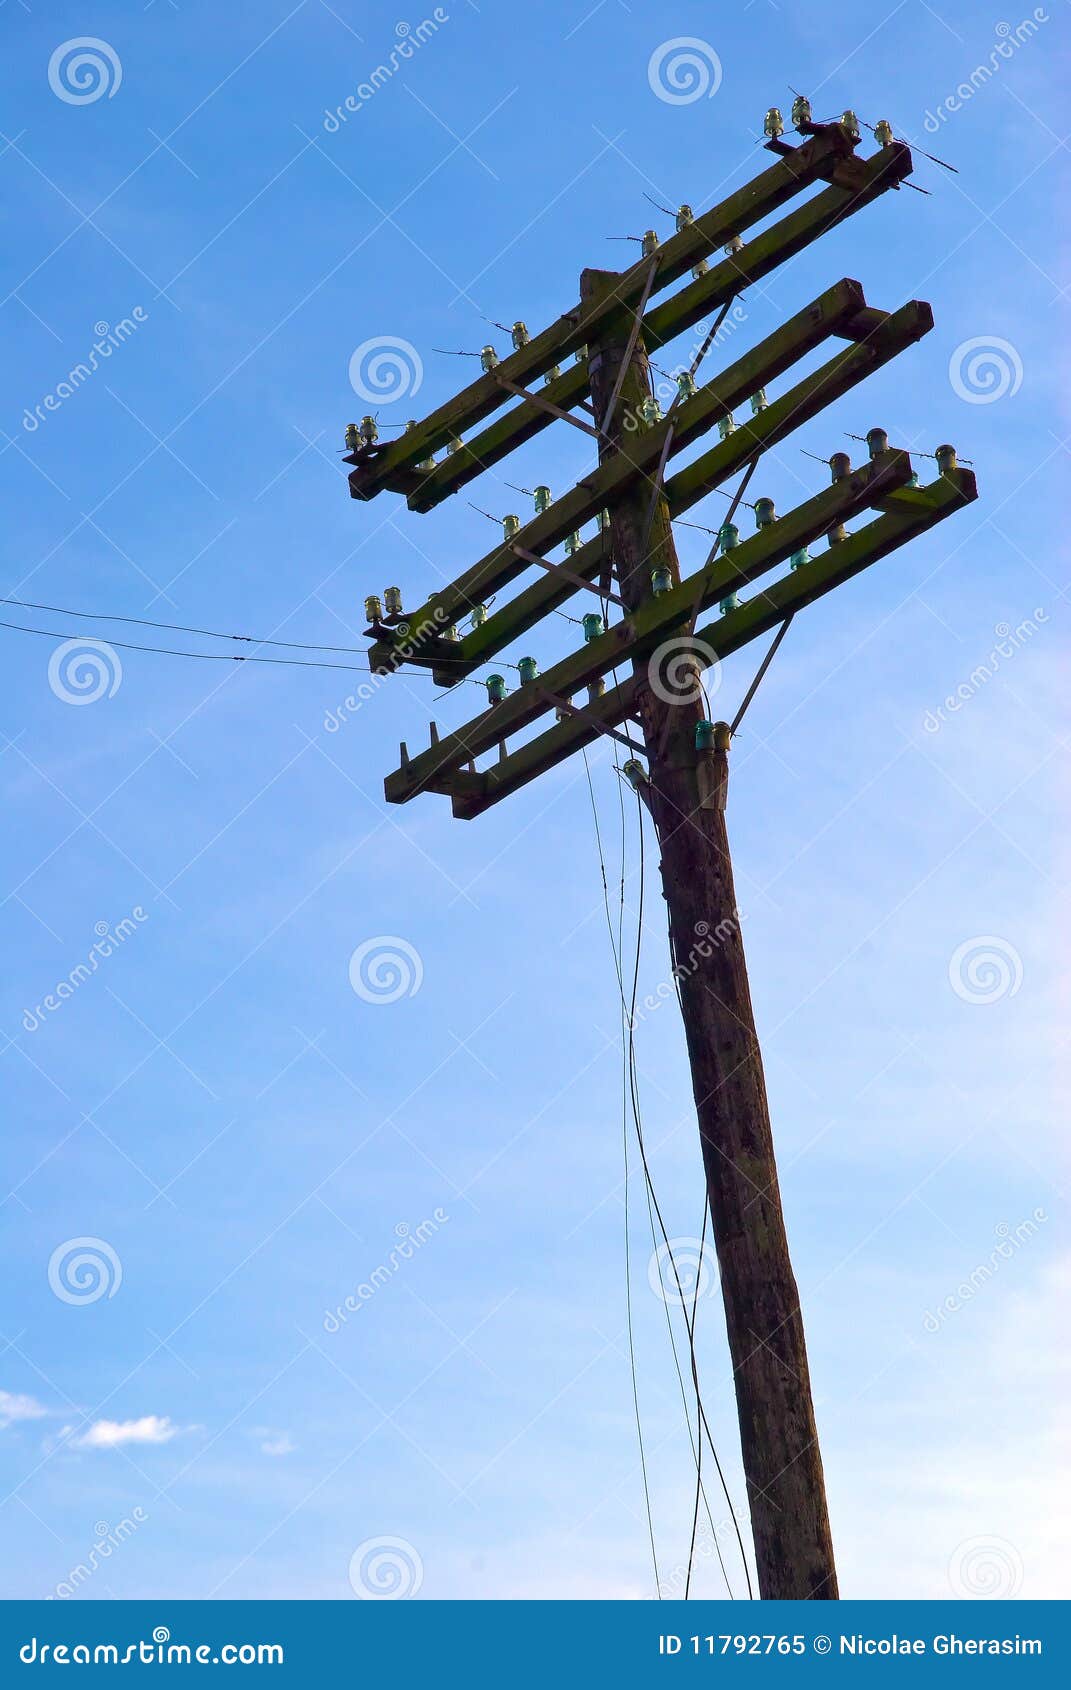 telephone or telegraph pole